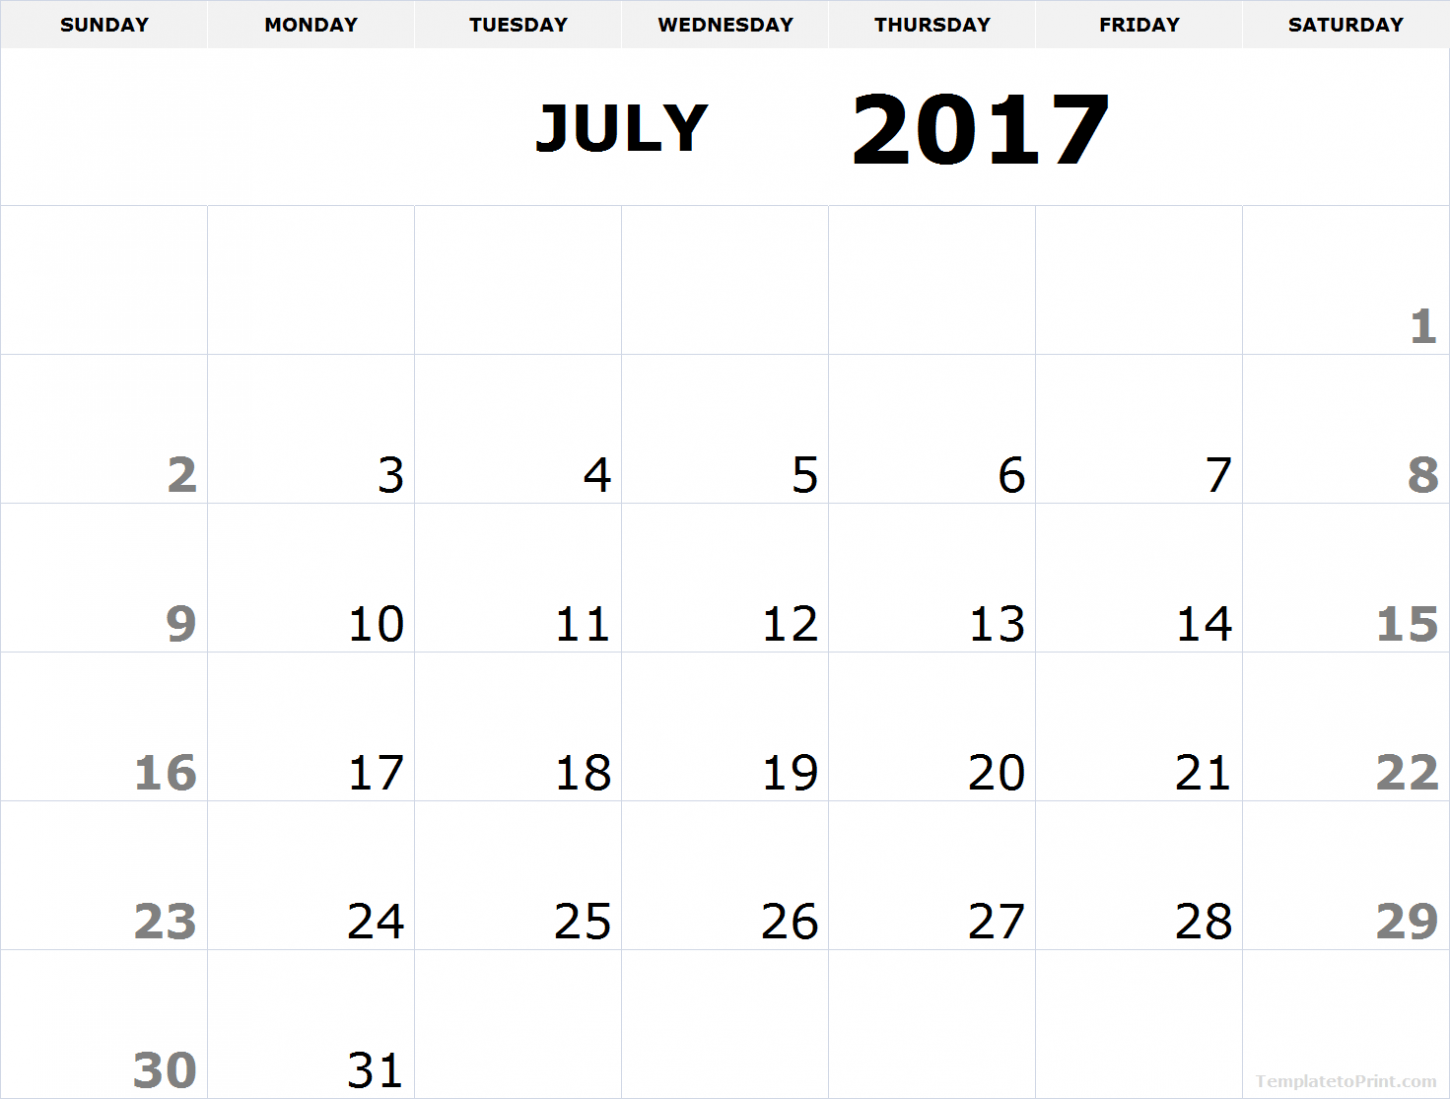 July 2017 Wallpaper Calendar For Desktop, Laptop & Mobile